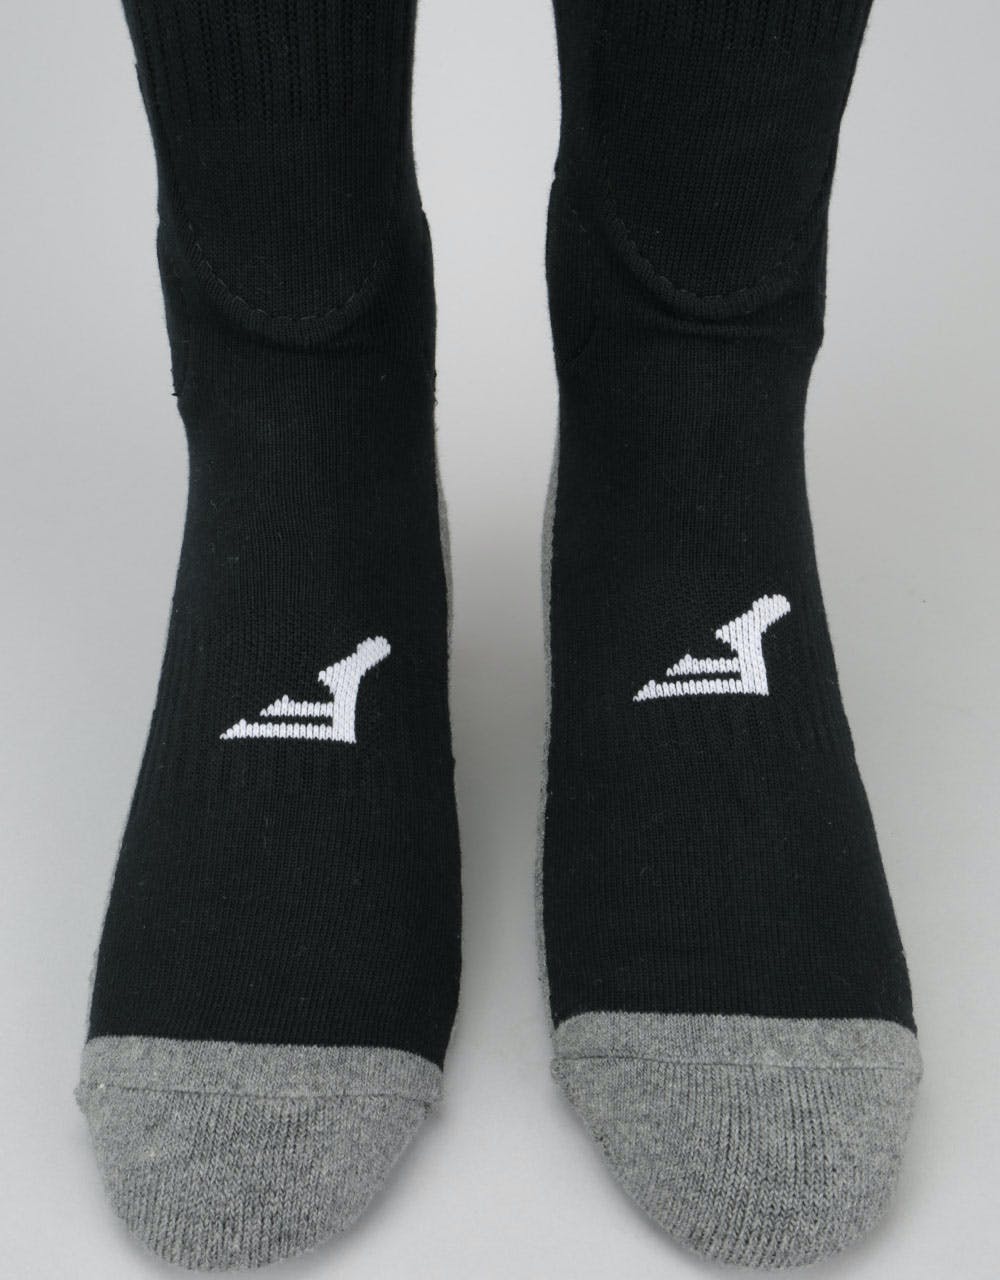 Footprint Painkiller High Socks